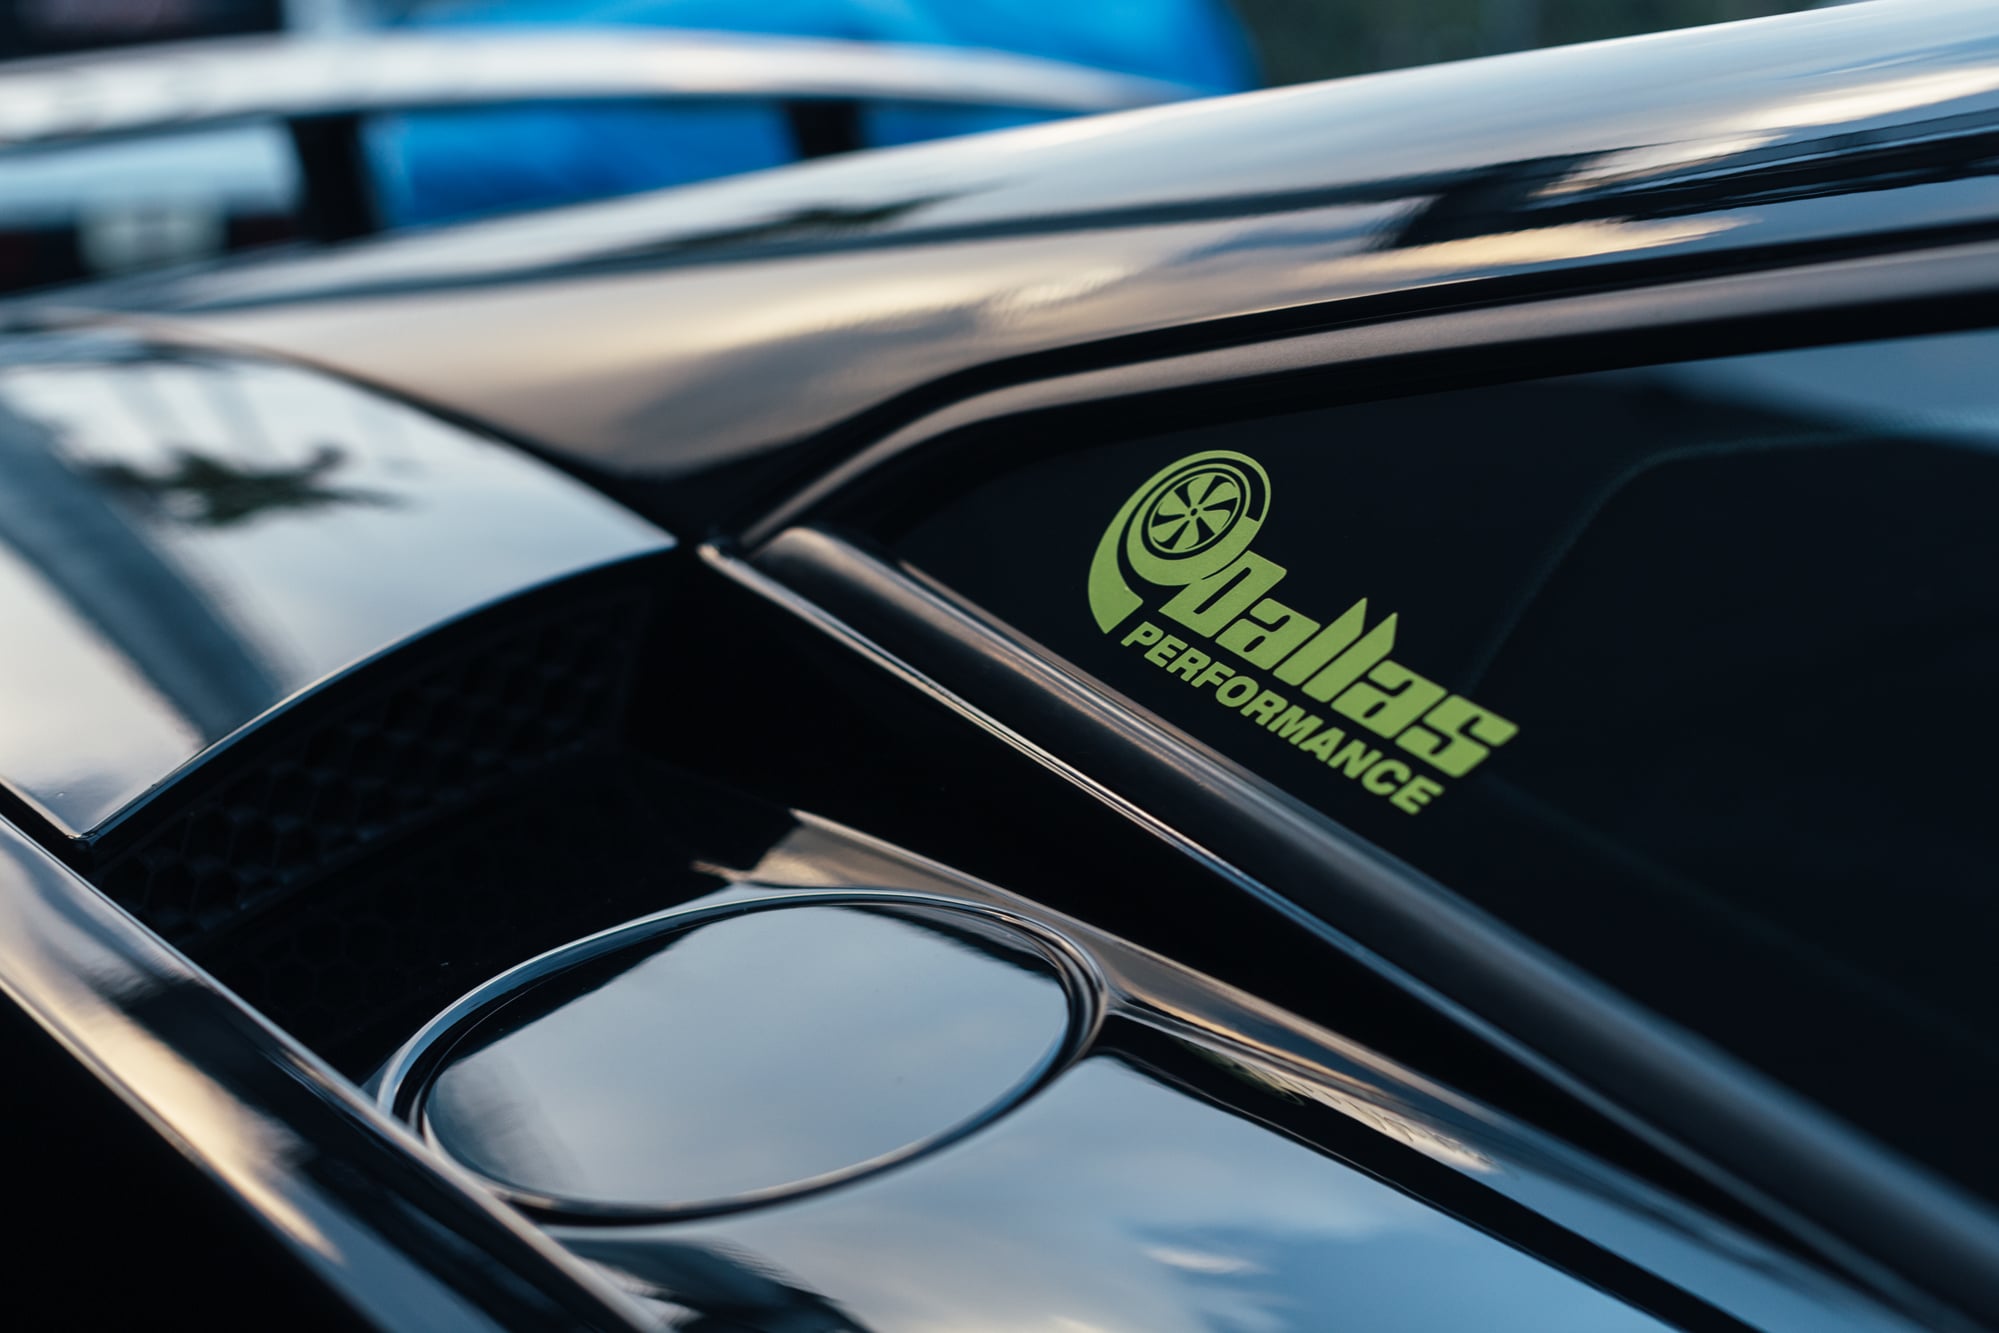 2009 Lamborghini Gallardo Twin-Turbo (LP 560-4) by Dallas Performance (1,847 BHP/ 1,719 WHP) | 6 Speed Manual